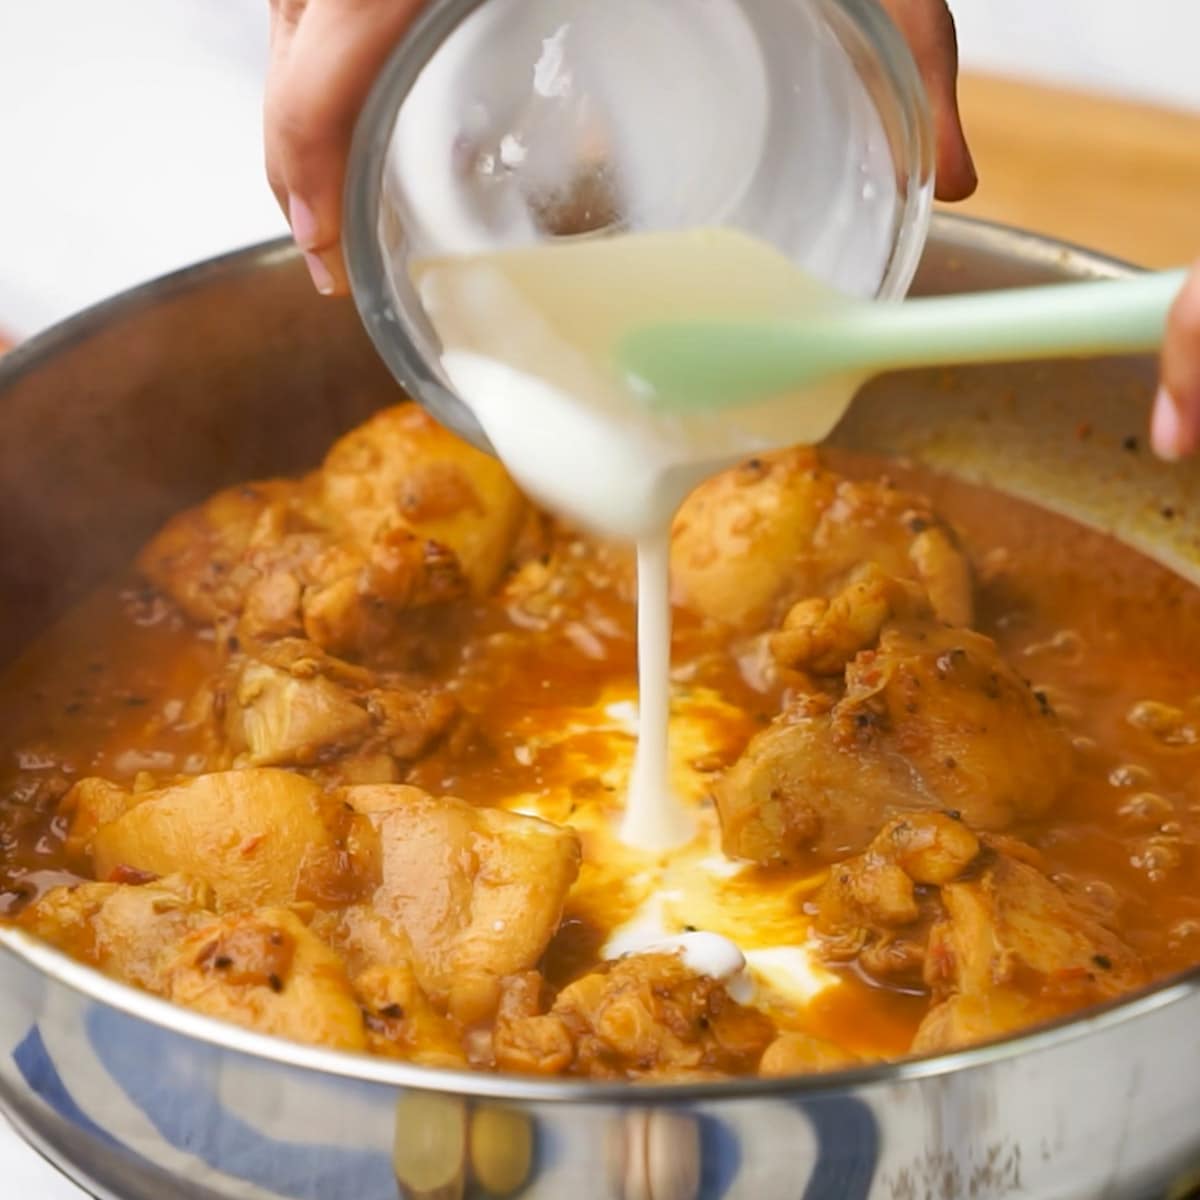 Adding Yoghurt in the kadai filled with Achari Chicken